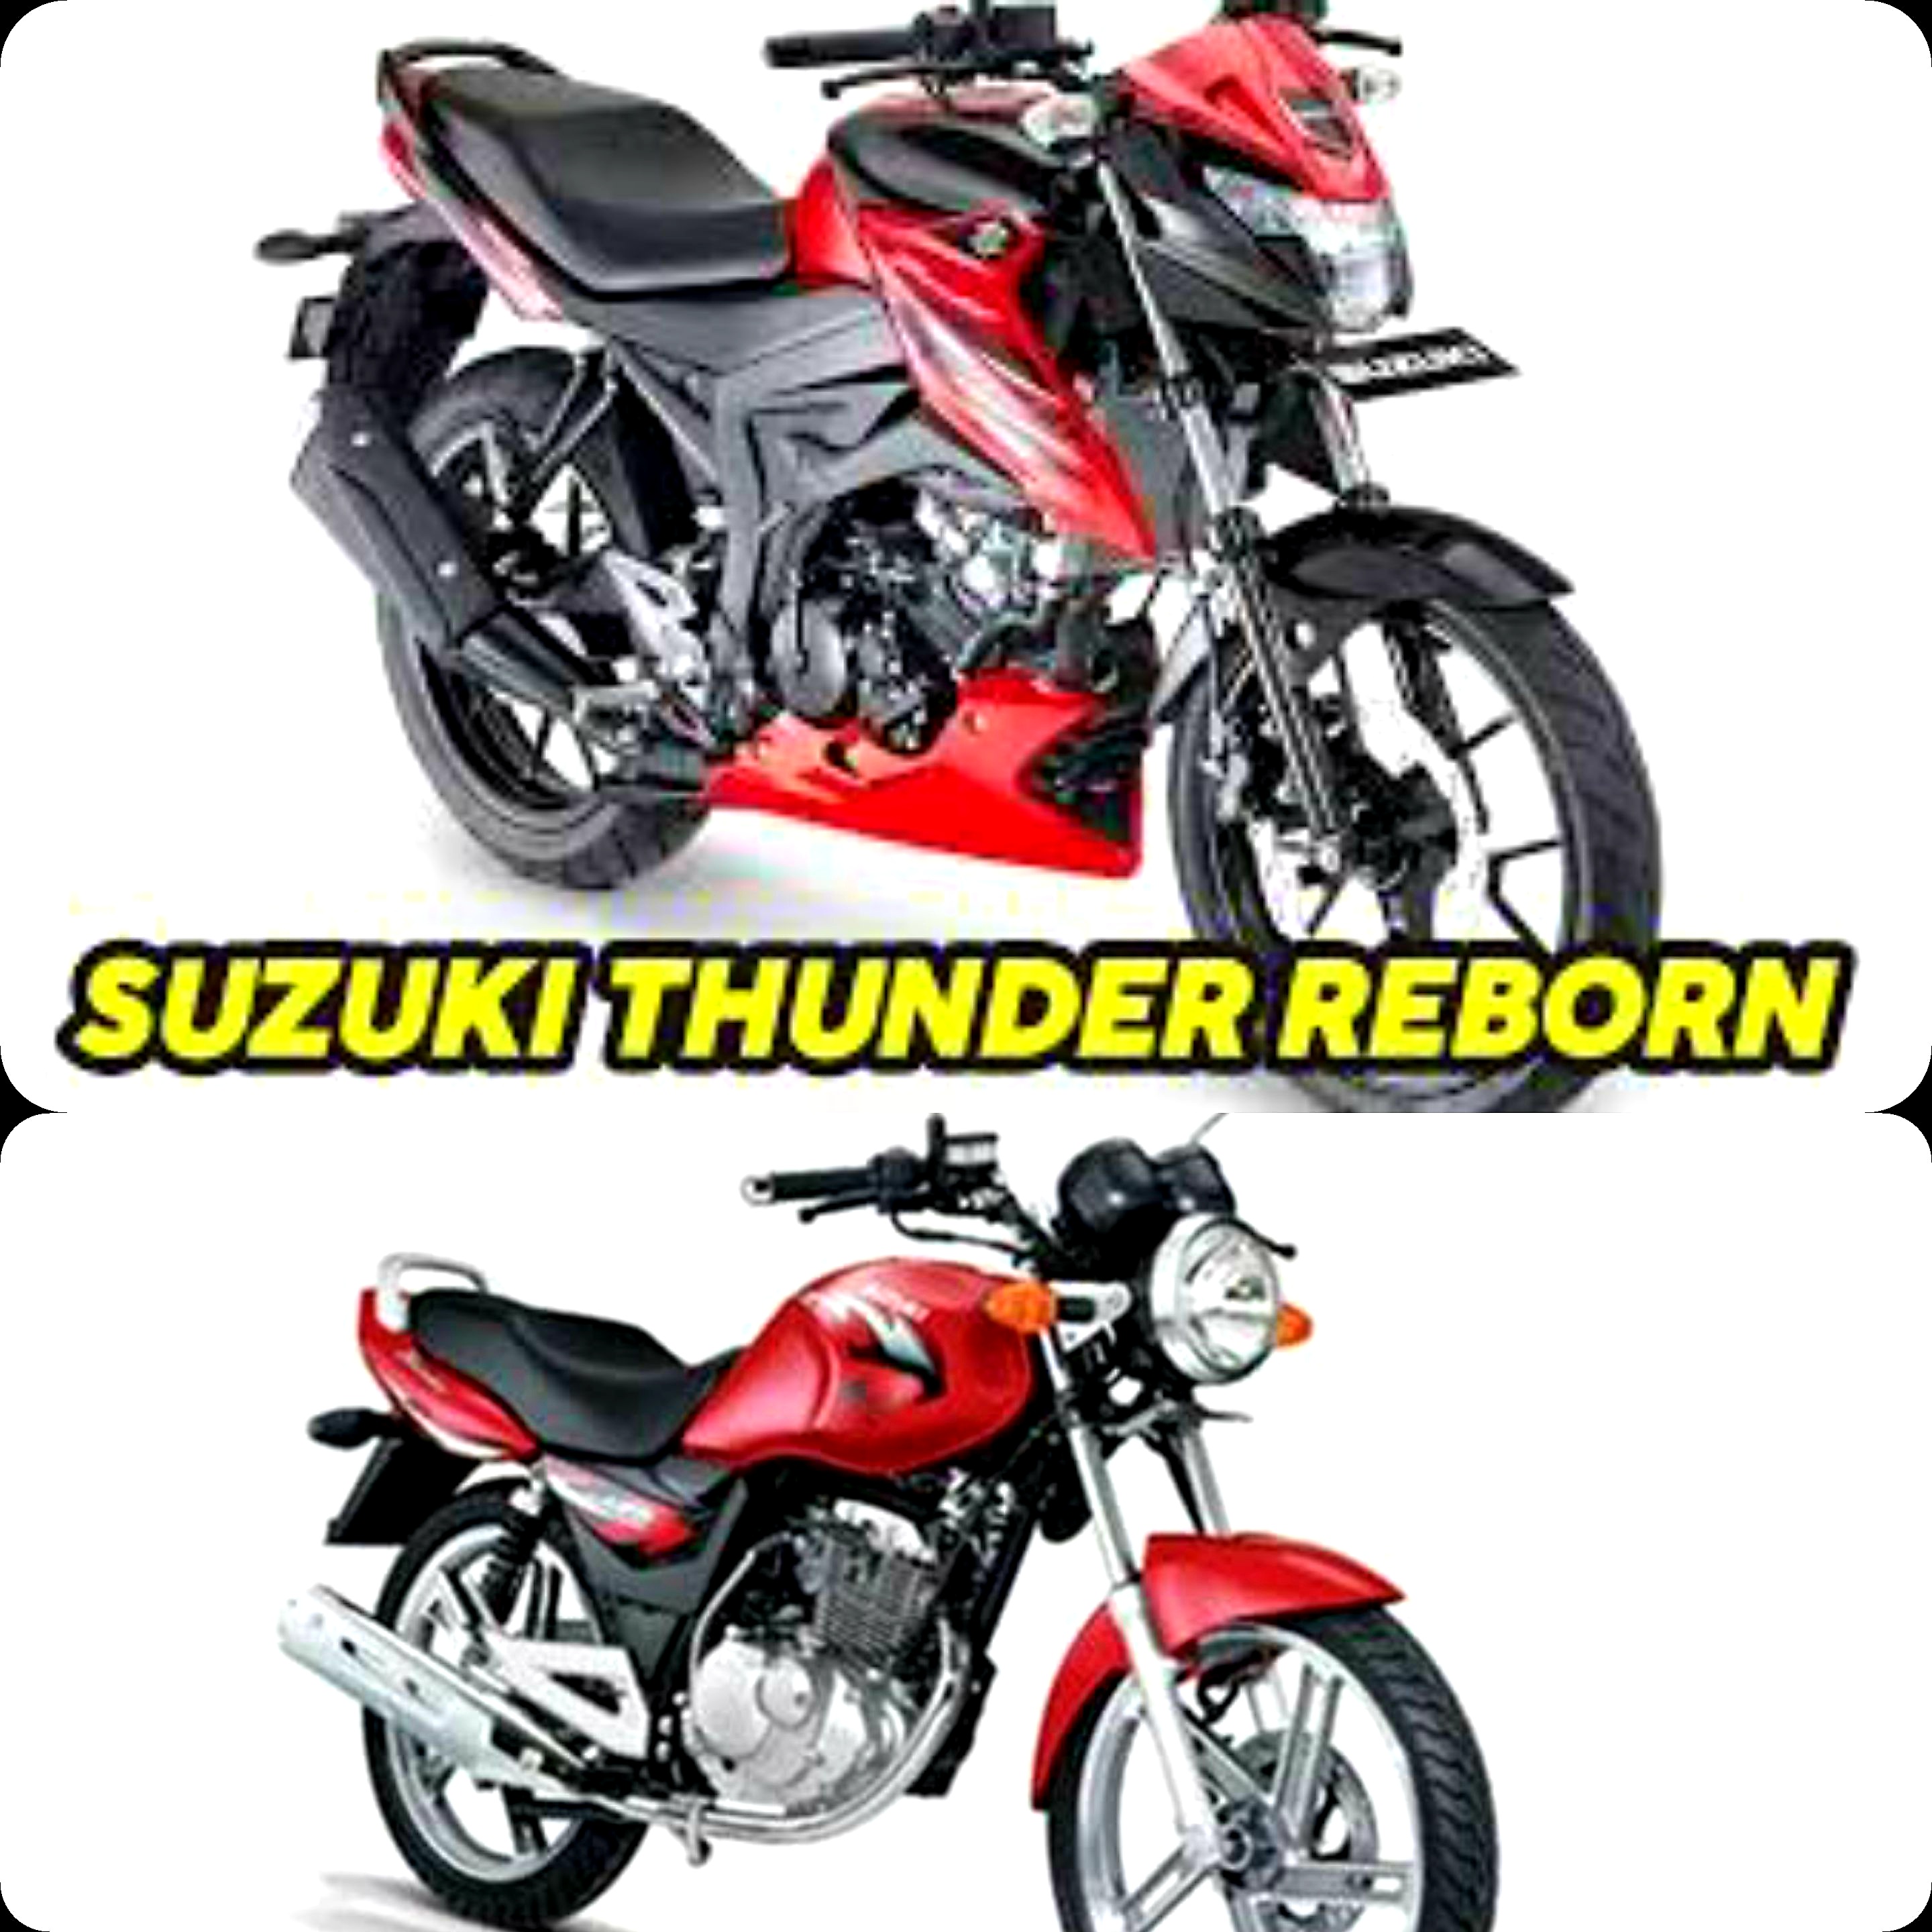 Transformasi Thunder Old ke Thunder Reborn 2024. Sejarah Motor Sport Mesin Kecil Pabrikan Suzuki